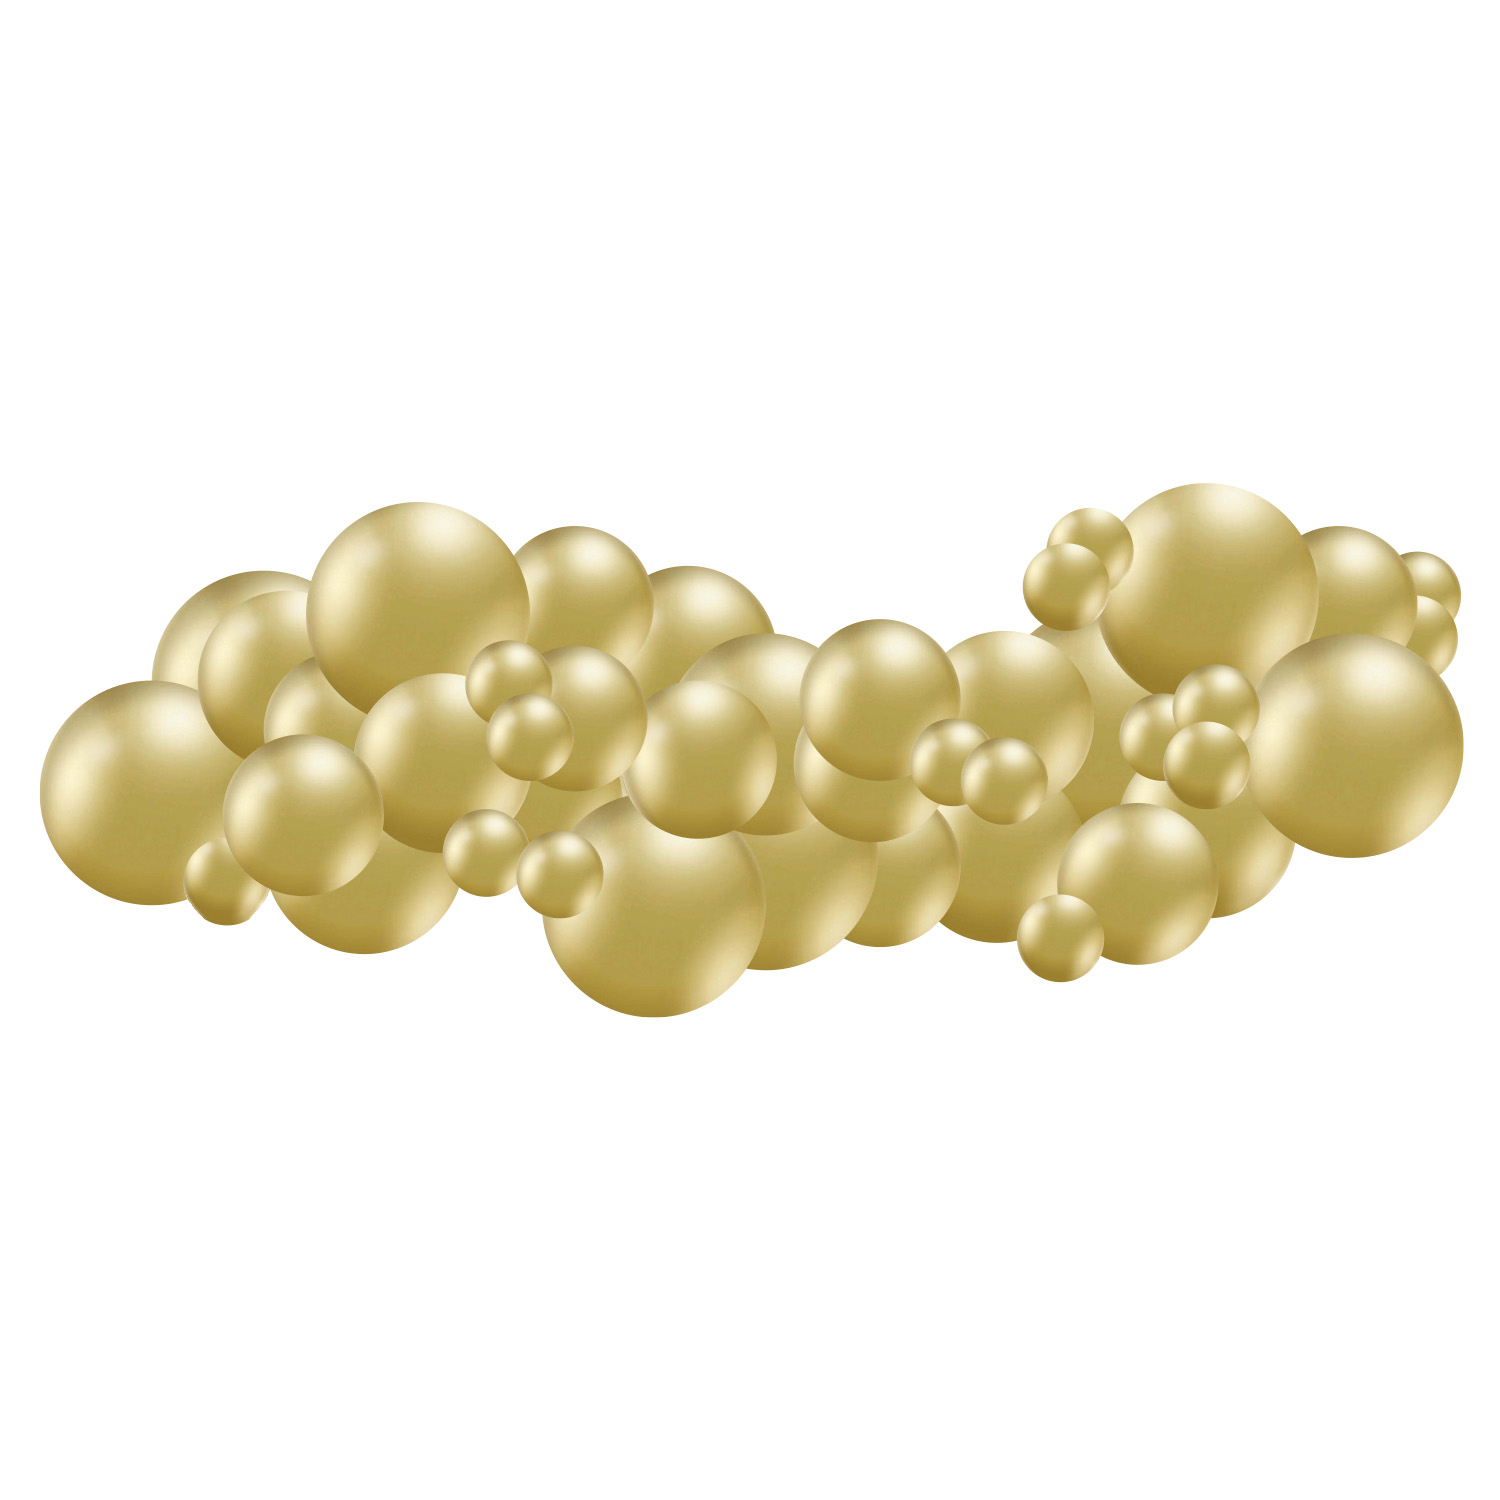 Organisk ballonggirlang Glossy Gold (8 m)